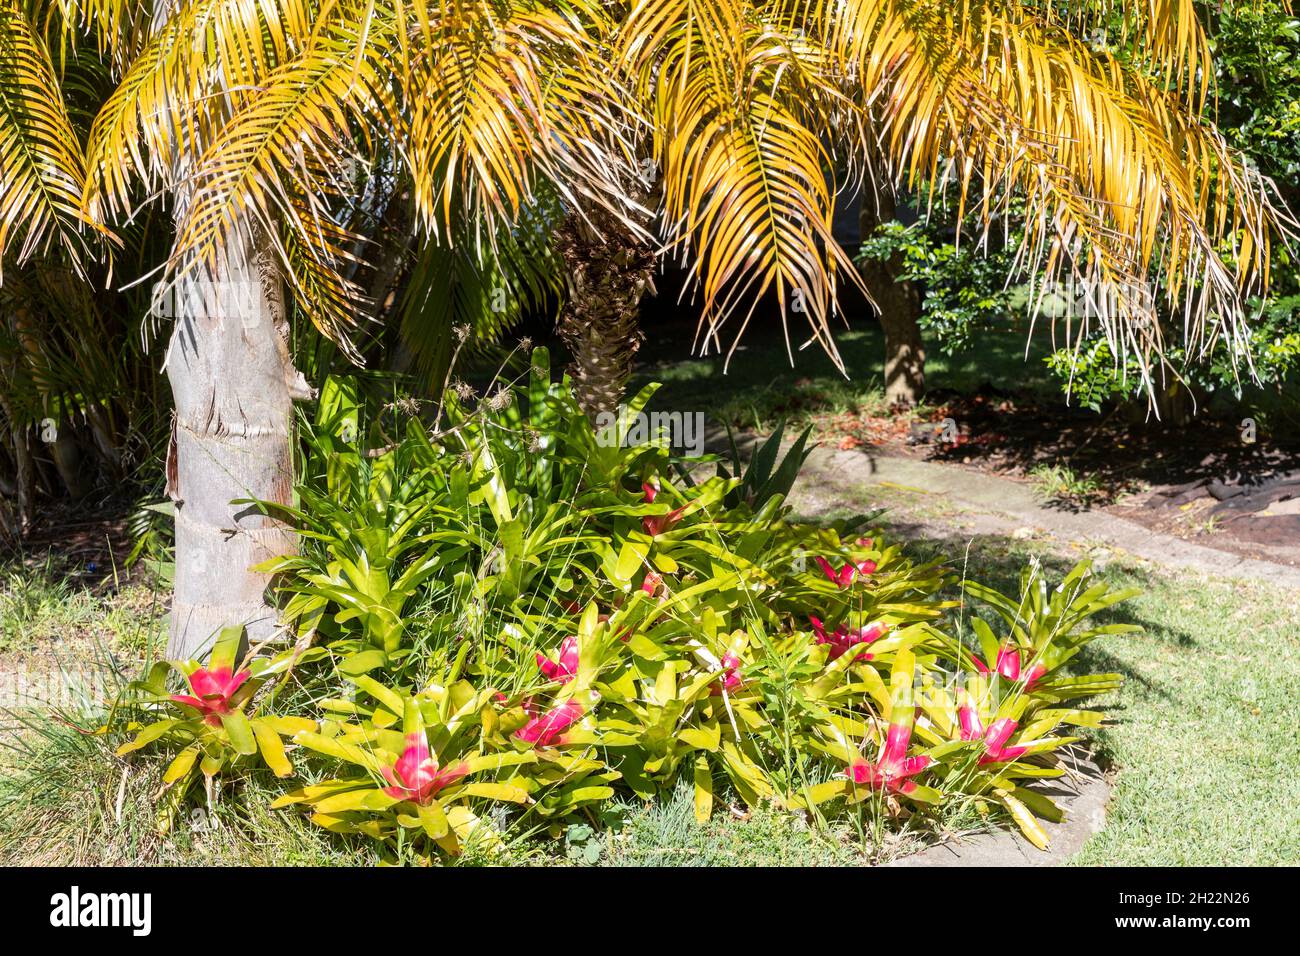 Sydney suburban garden with bromeliad plants growing beneath palm tree,Sydney,Australia Stock Photo